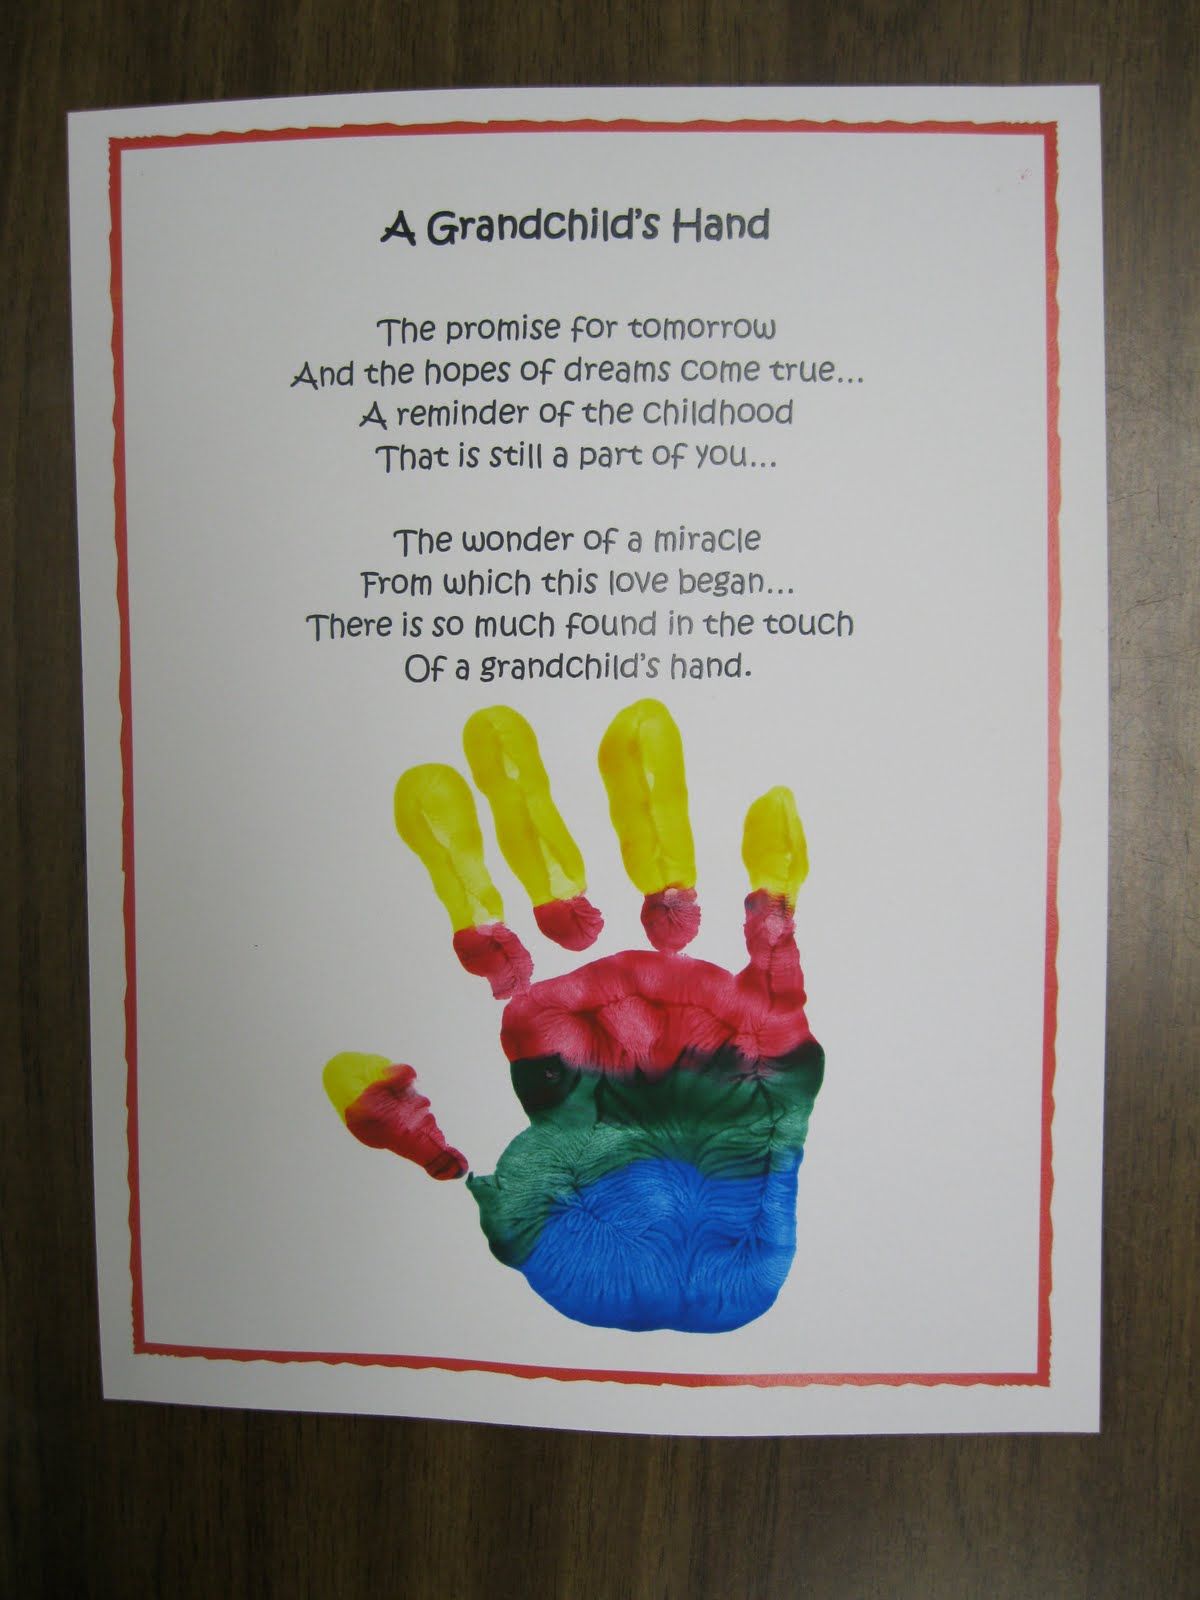 Grandparents Day Poem